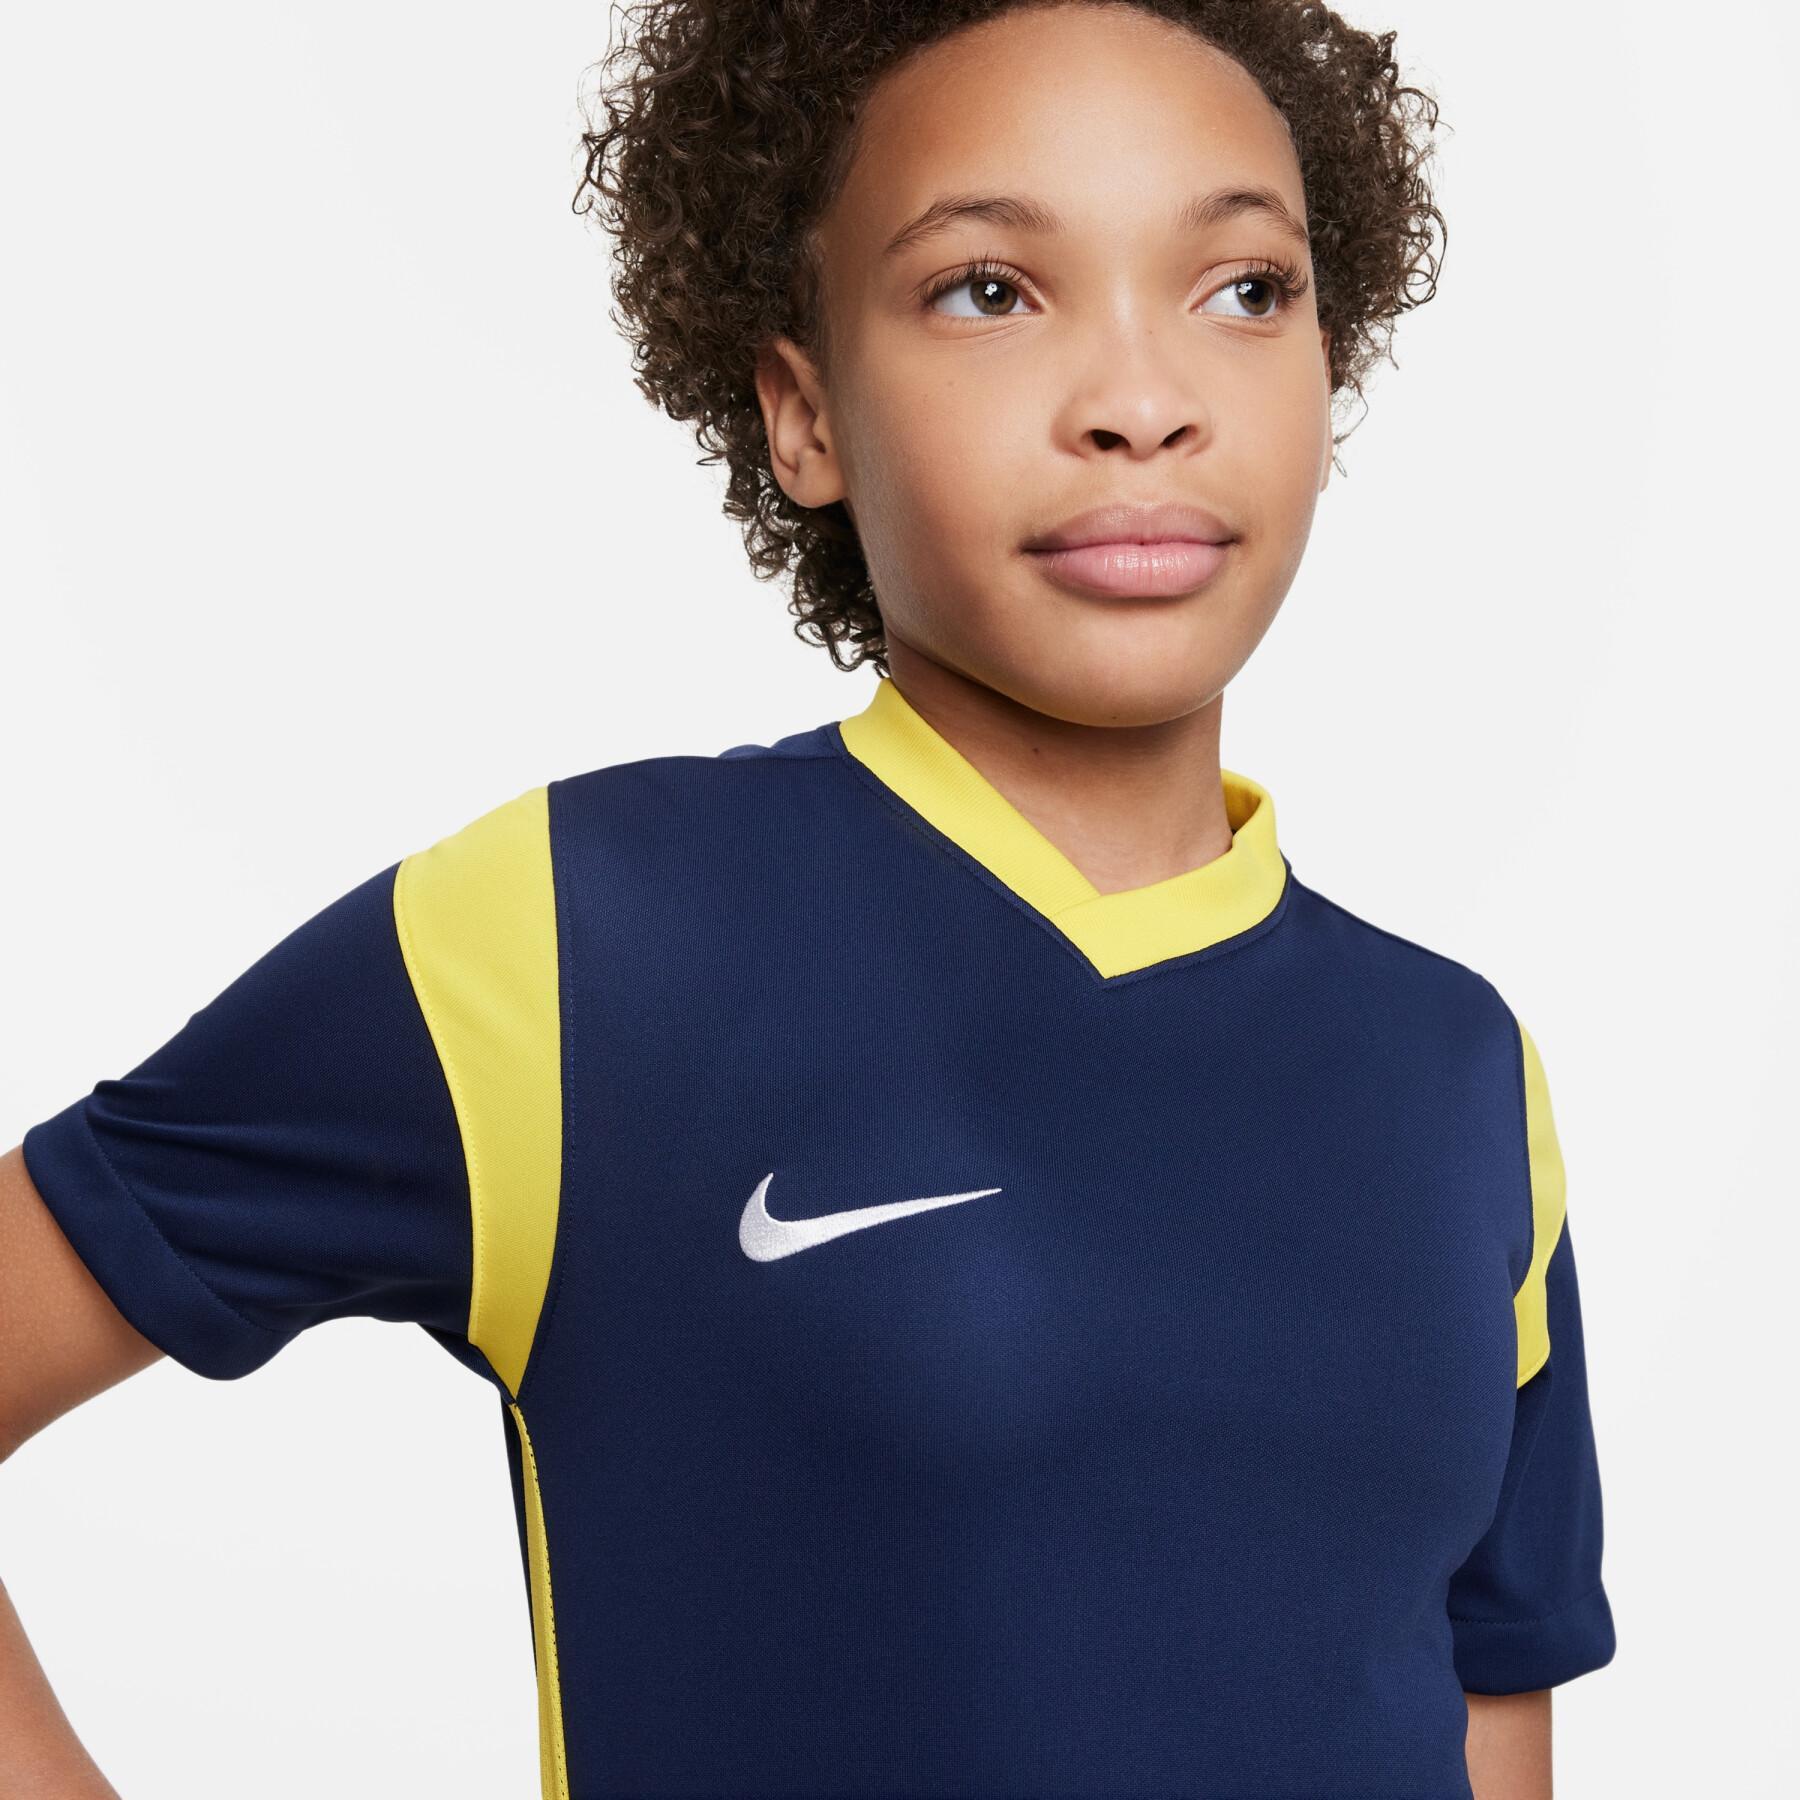 Camiseta para niños Nike Dynamic Fit Derby III